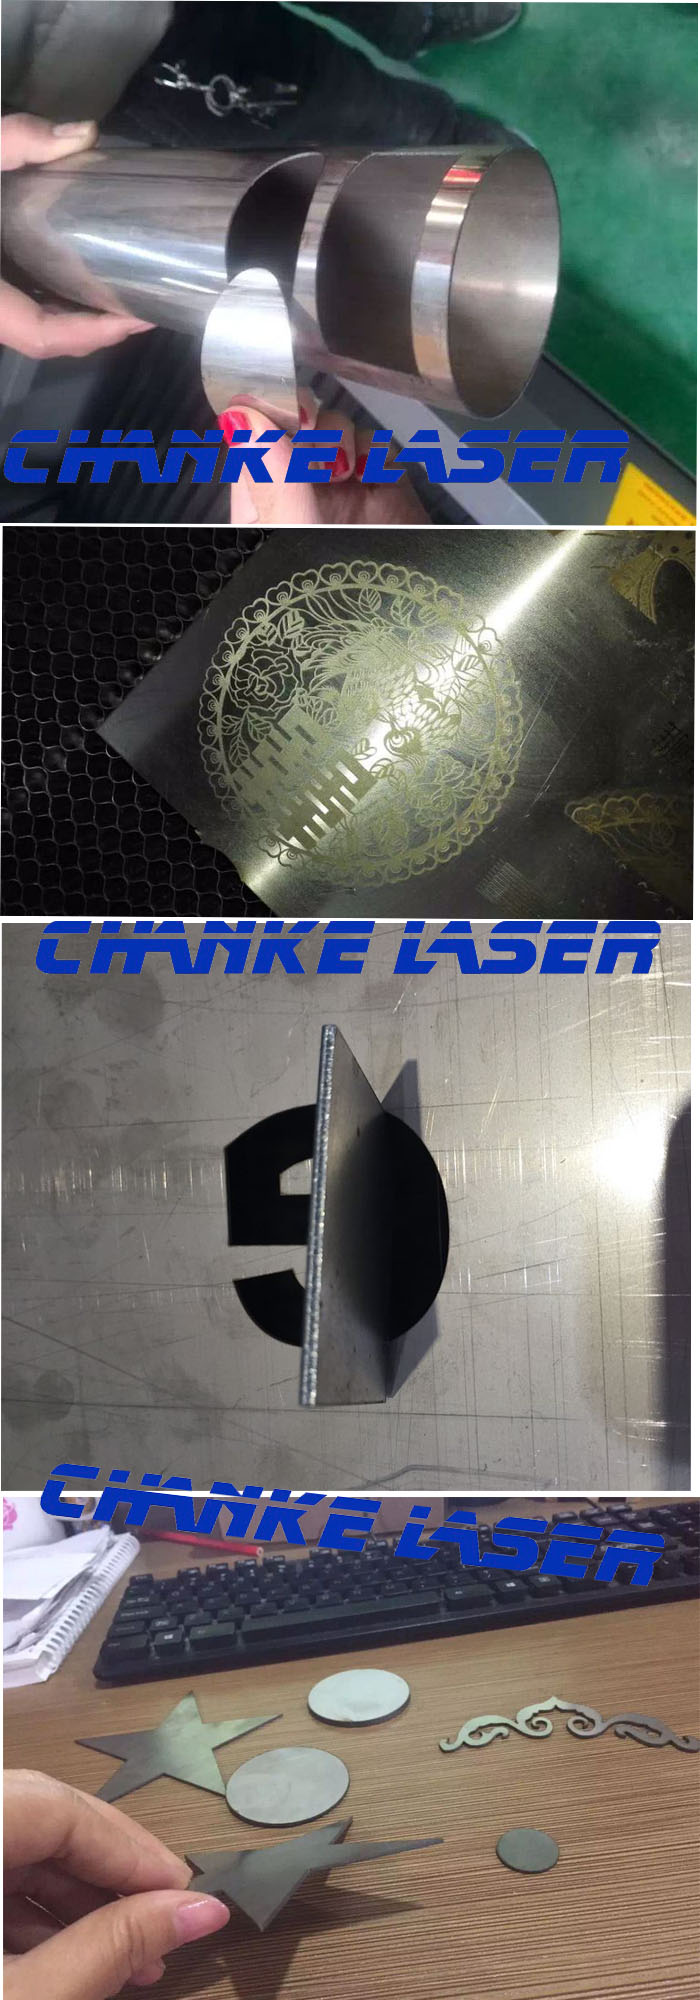 1300X900mm150W 1.5mm Metal Wood Board Laser Engraving Cutting Cutter Price